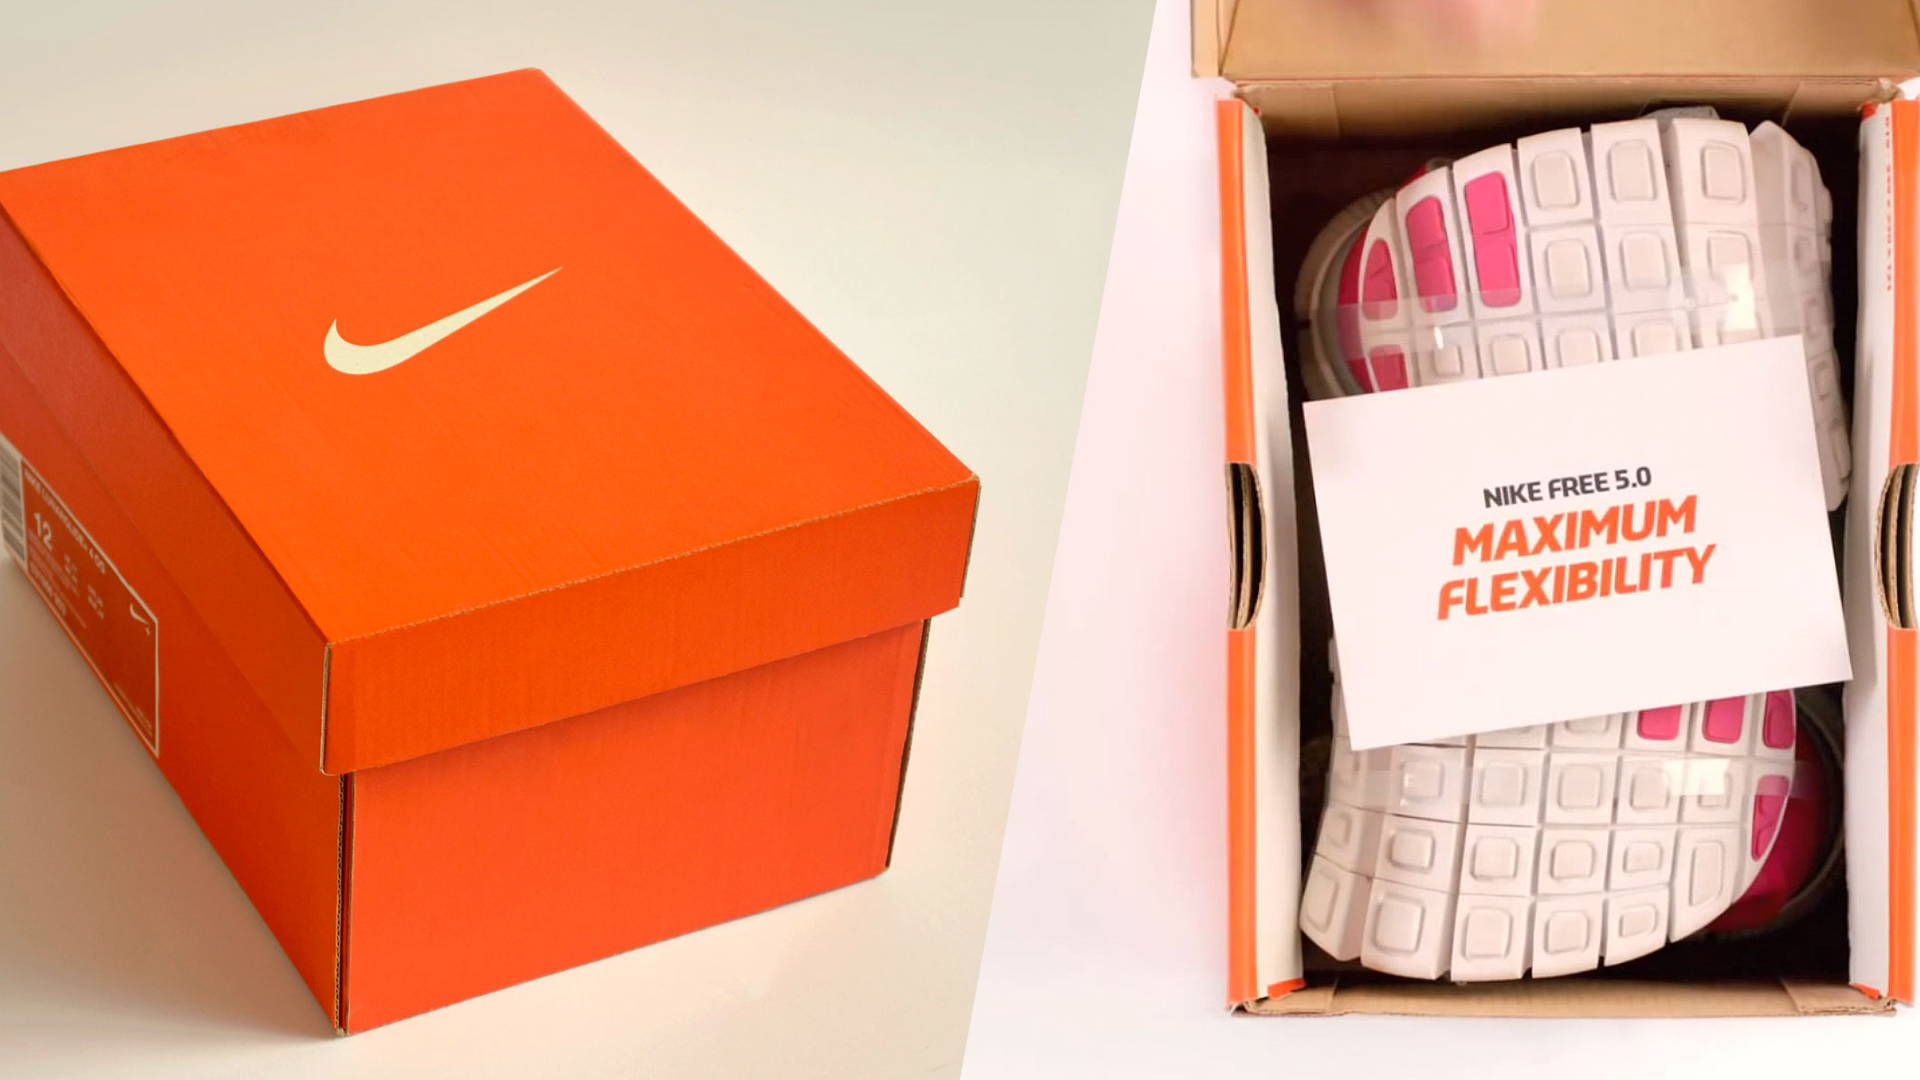 Armonía Retirado Cereza Nike Free Box: A Shoebox 1/3 the Size of the Original | Dieline - Design,  Branding & Packaging Inspiration